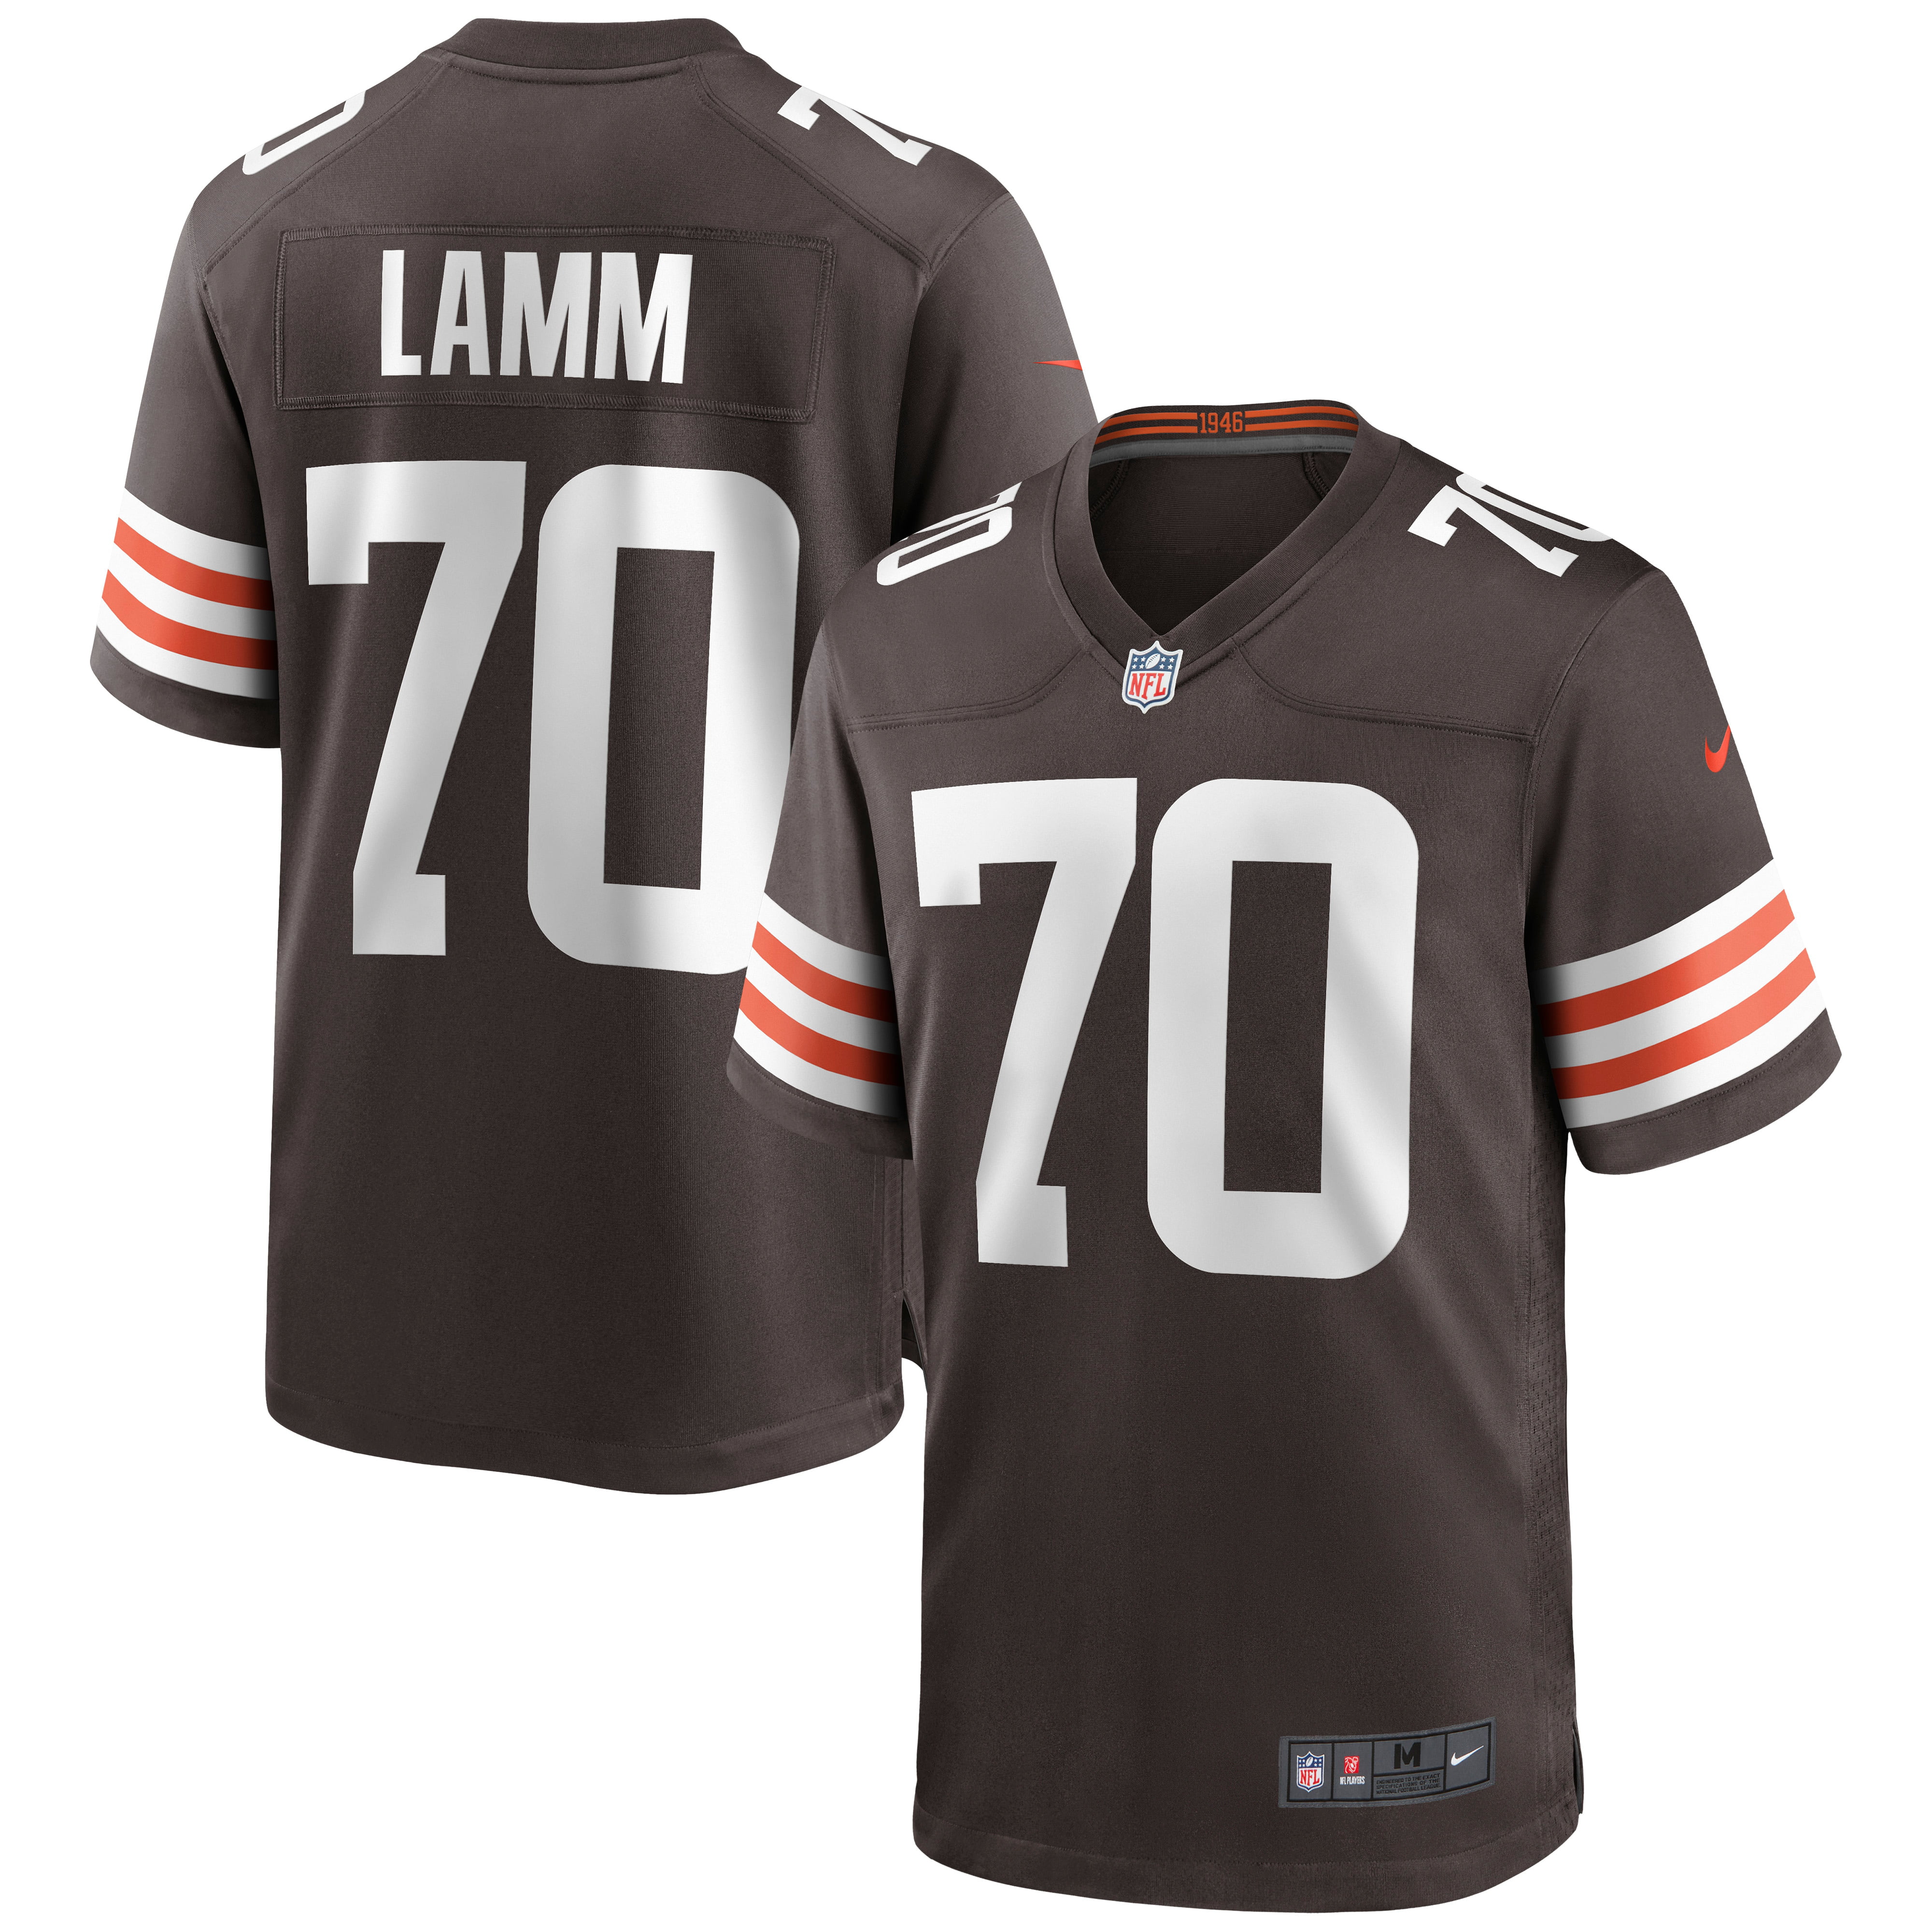 Kendall Lamm Cleveland Browns Nike Game Jersey - Brown - Walmart.com